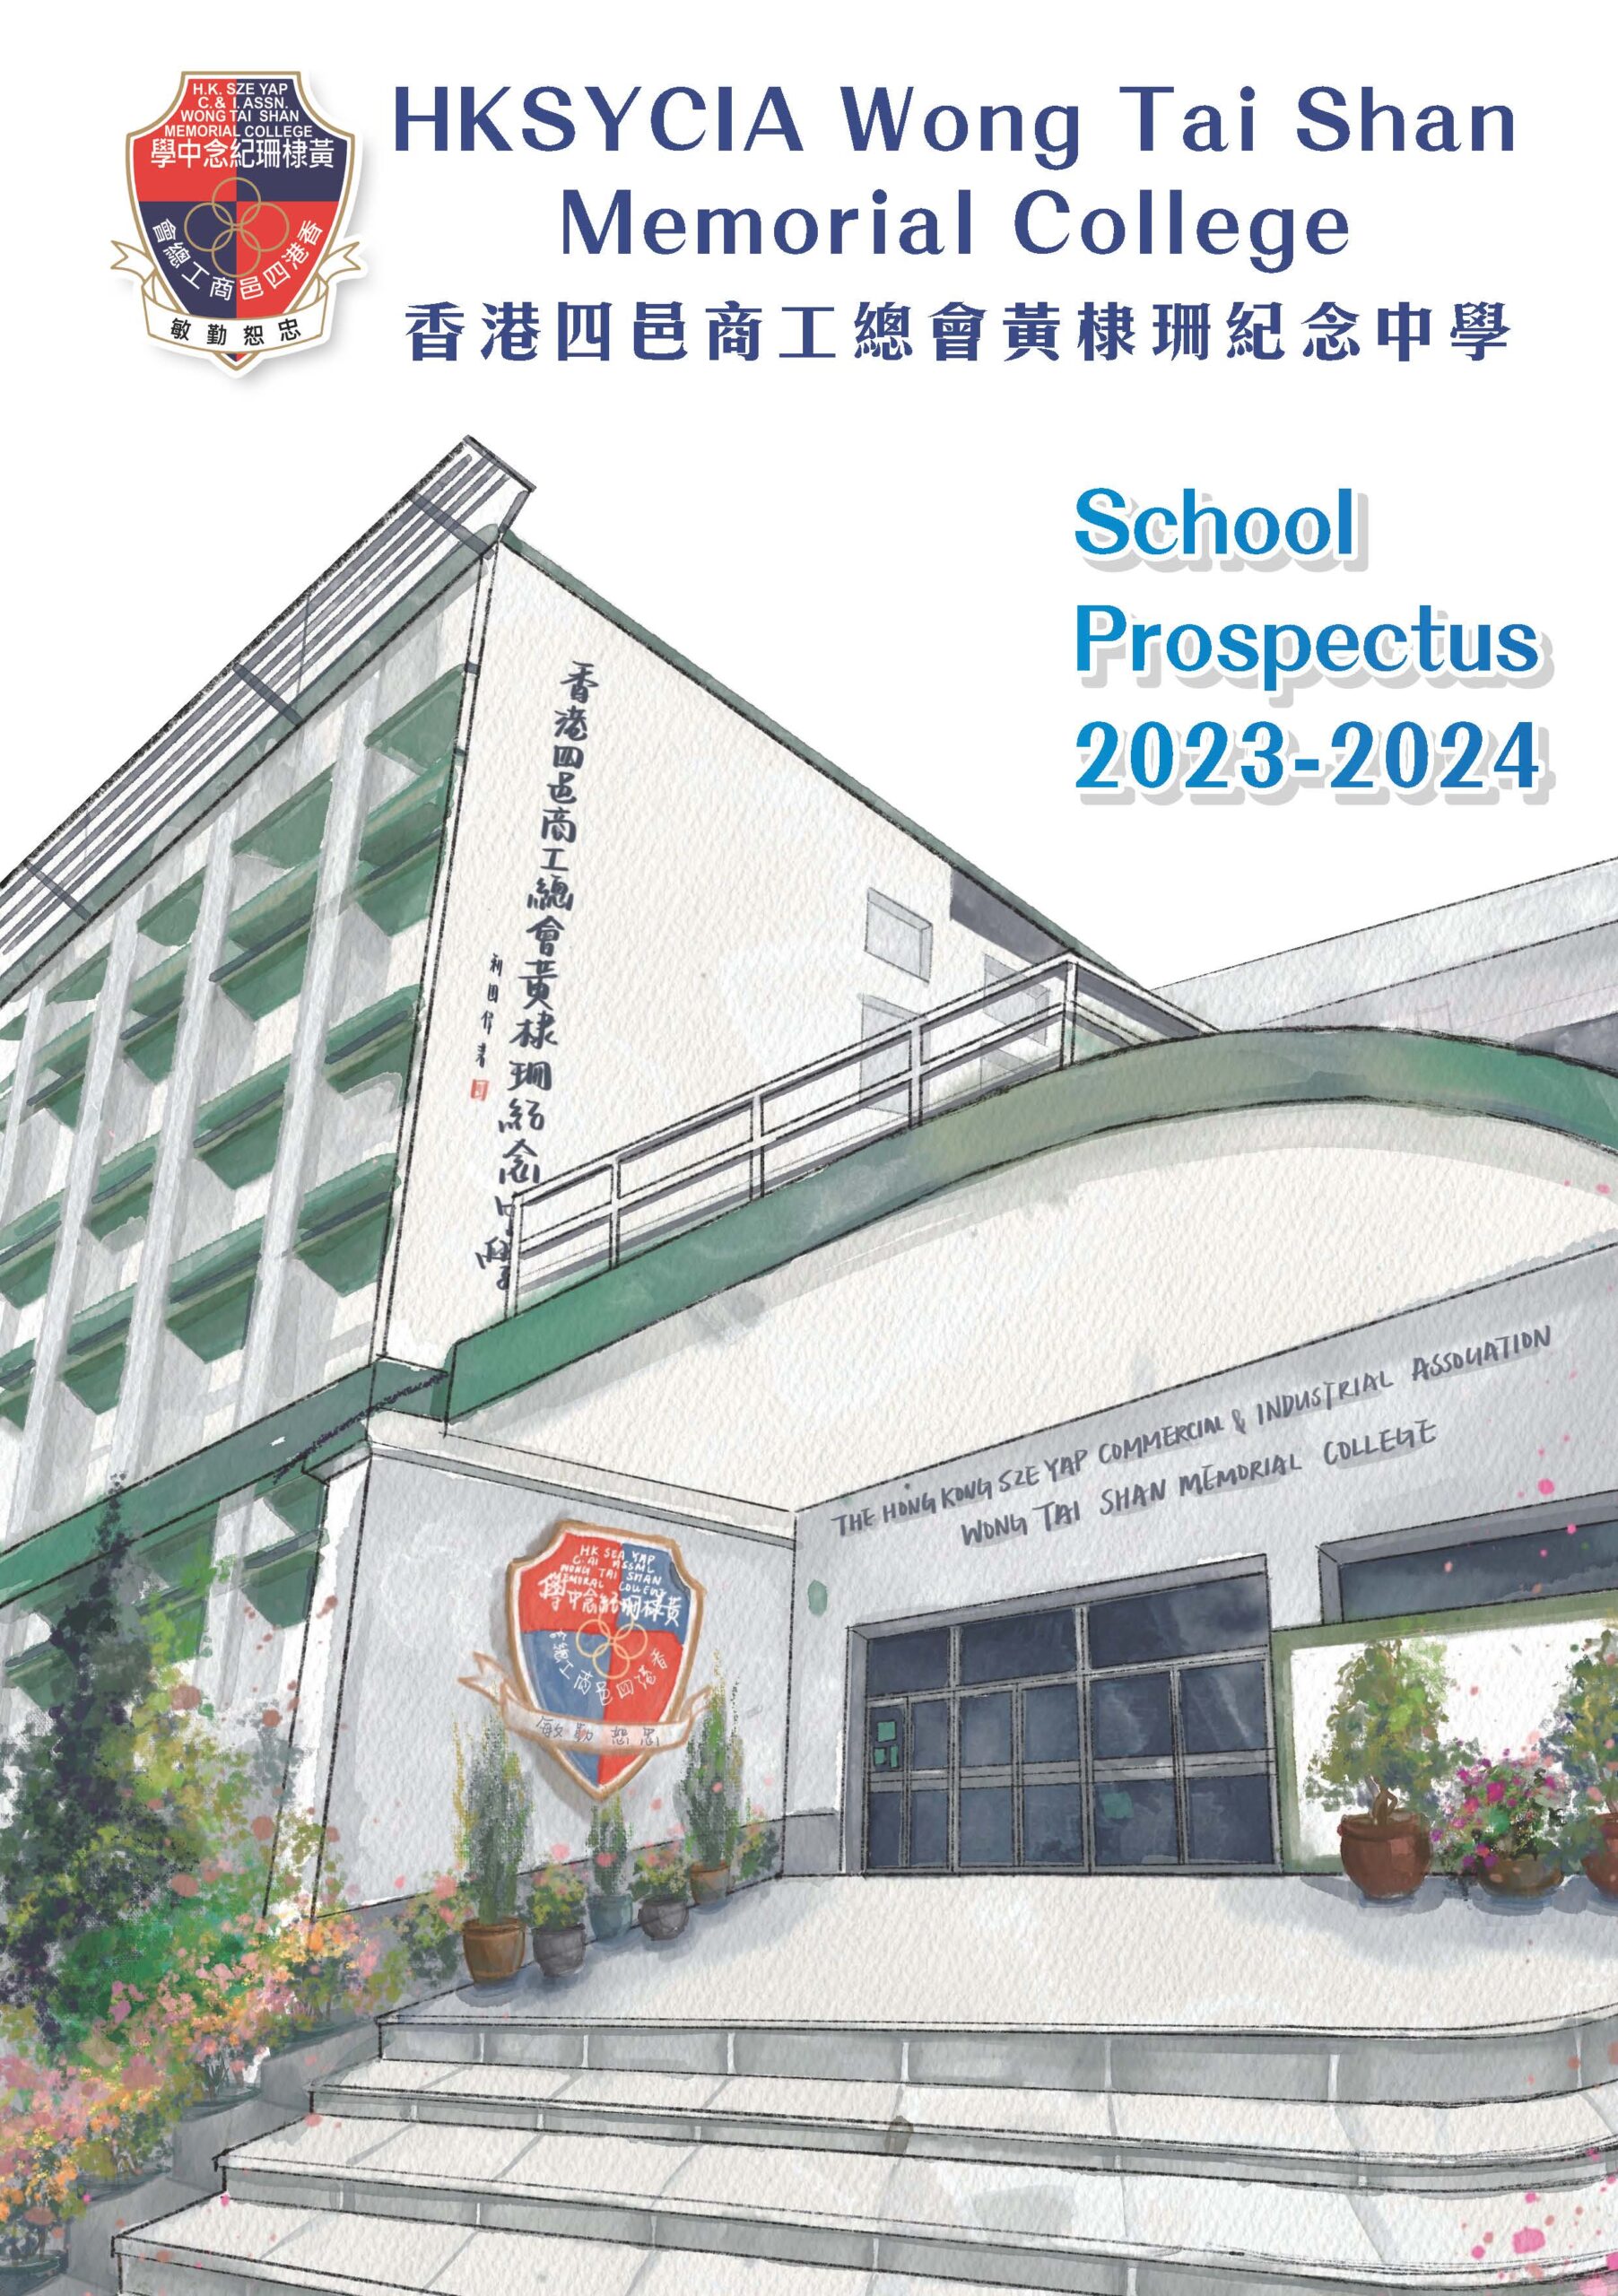 School Prospectus 2023-2024